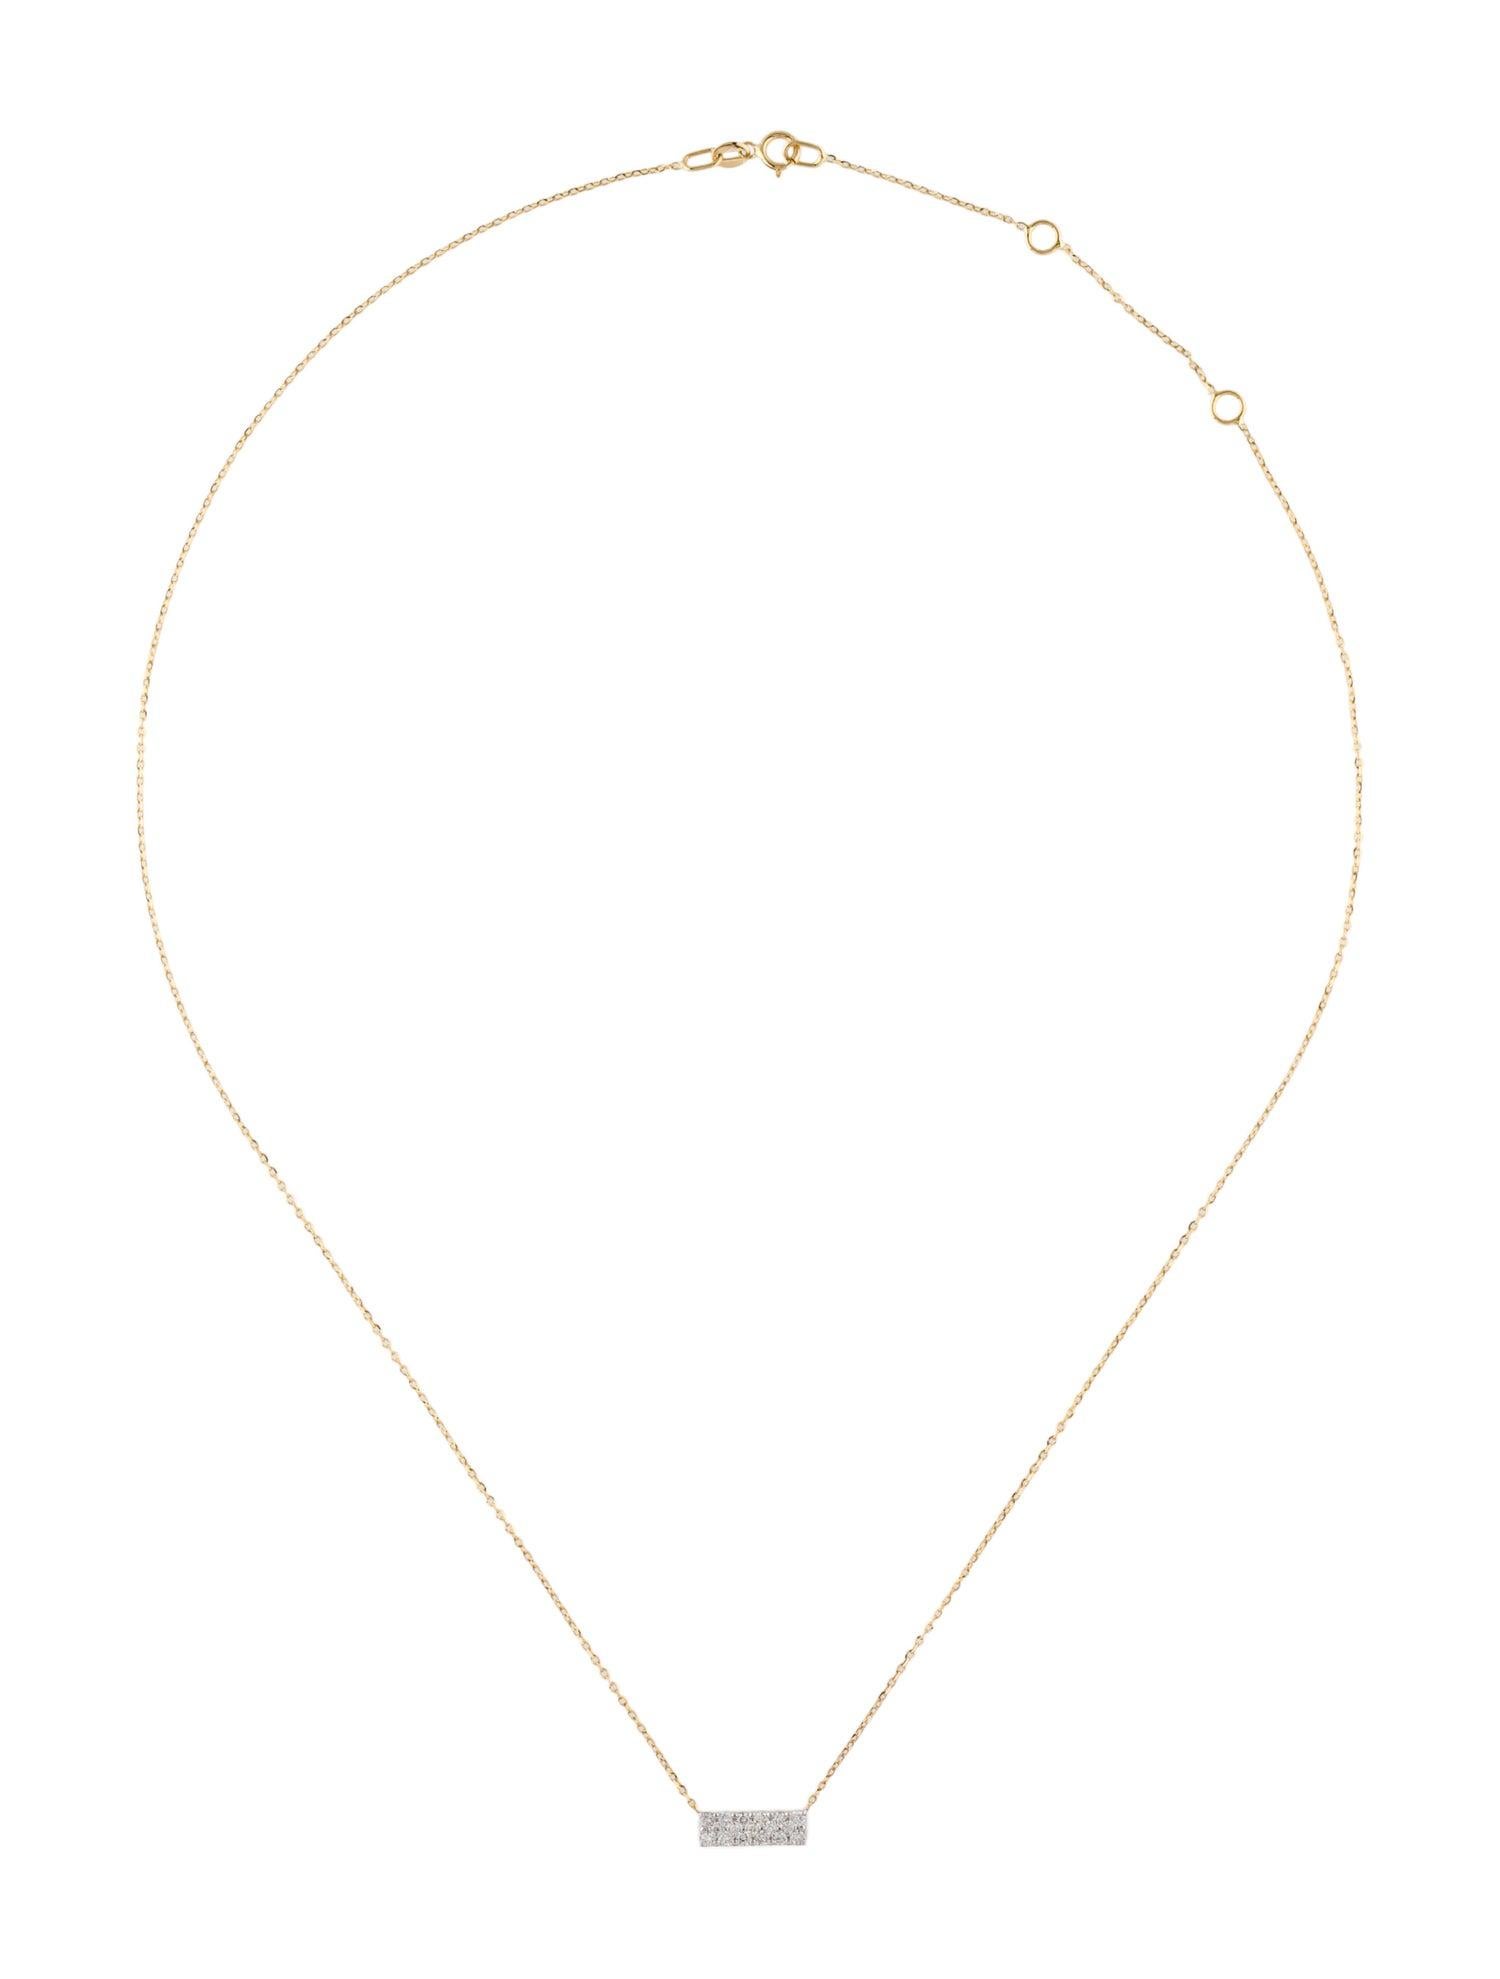 Round Cut 14K Rose Gold 0.23 Carat Diamond Necklace For Sale